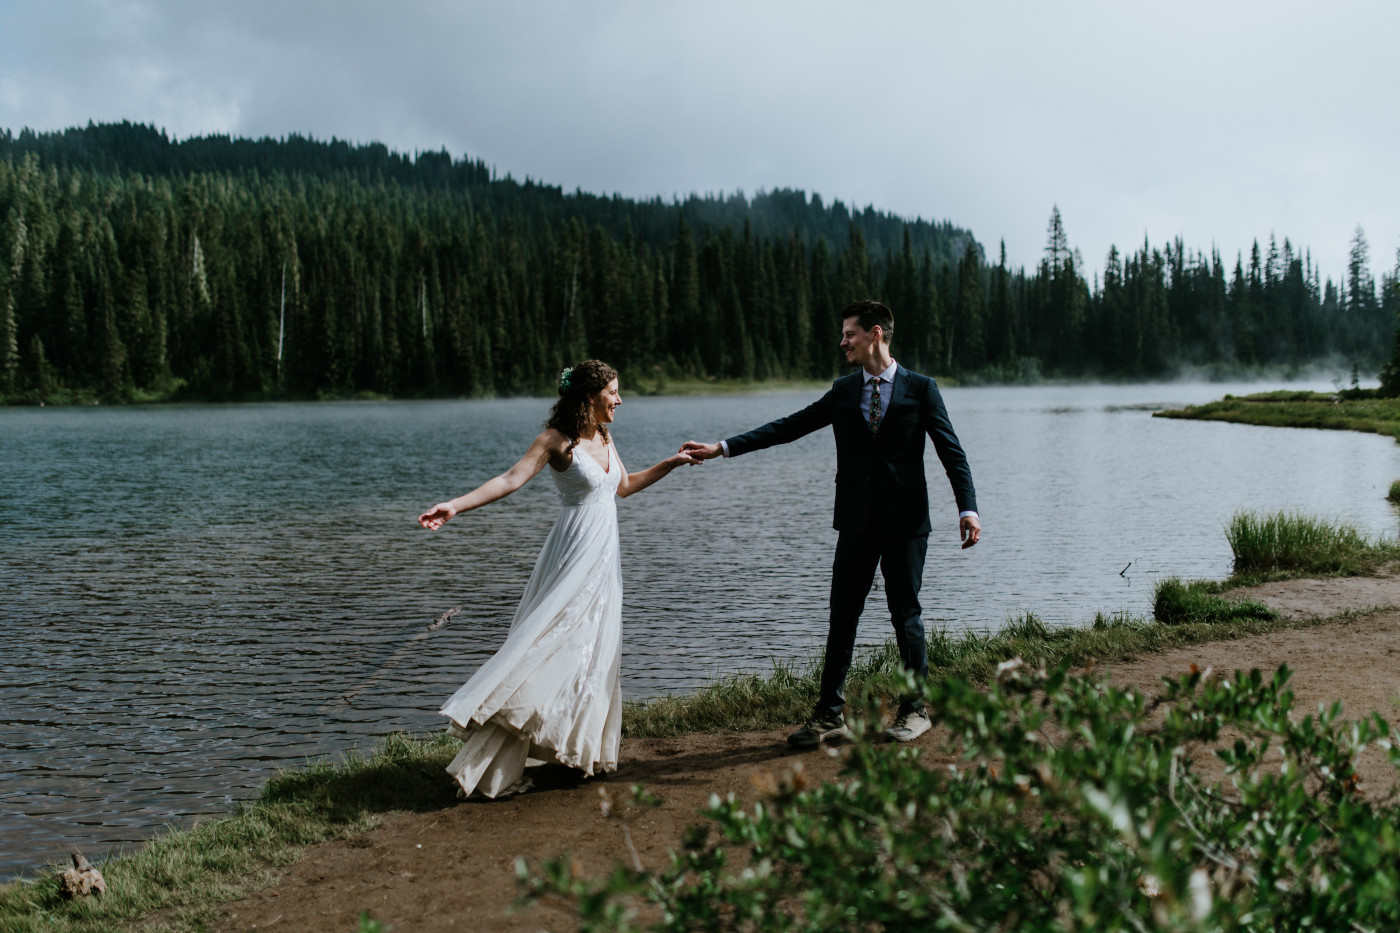 Tasha and Chad dance near a lake. Elopement photography at Mount Rainier by Sienna Plus Josh.